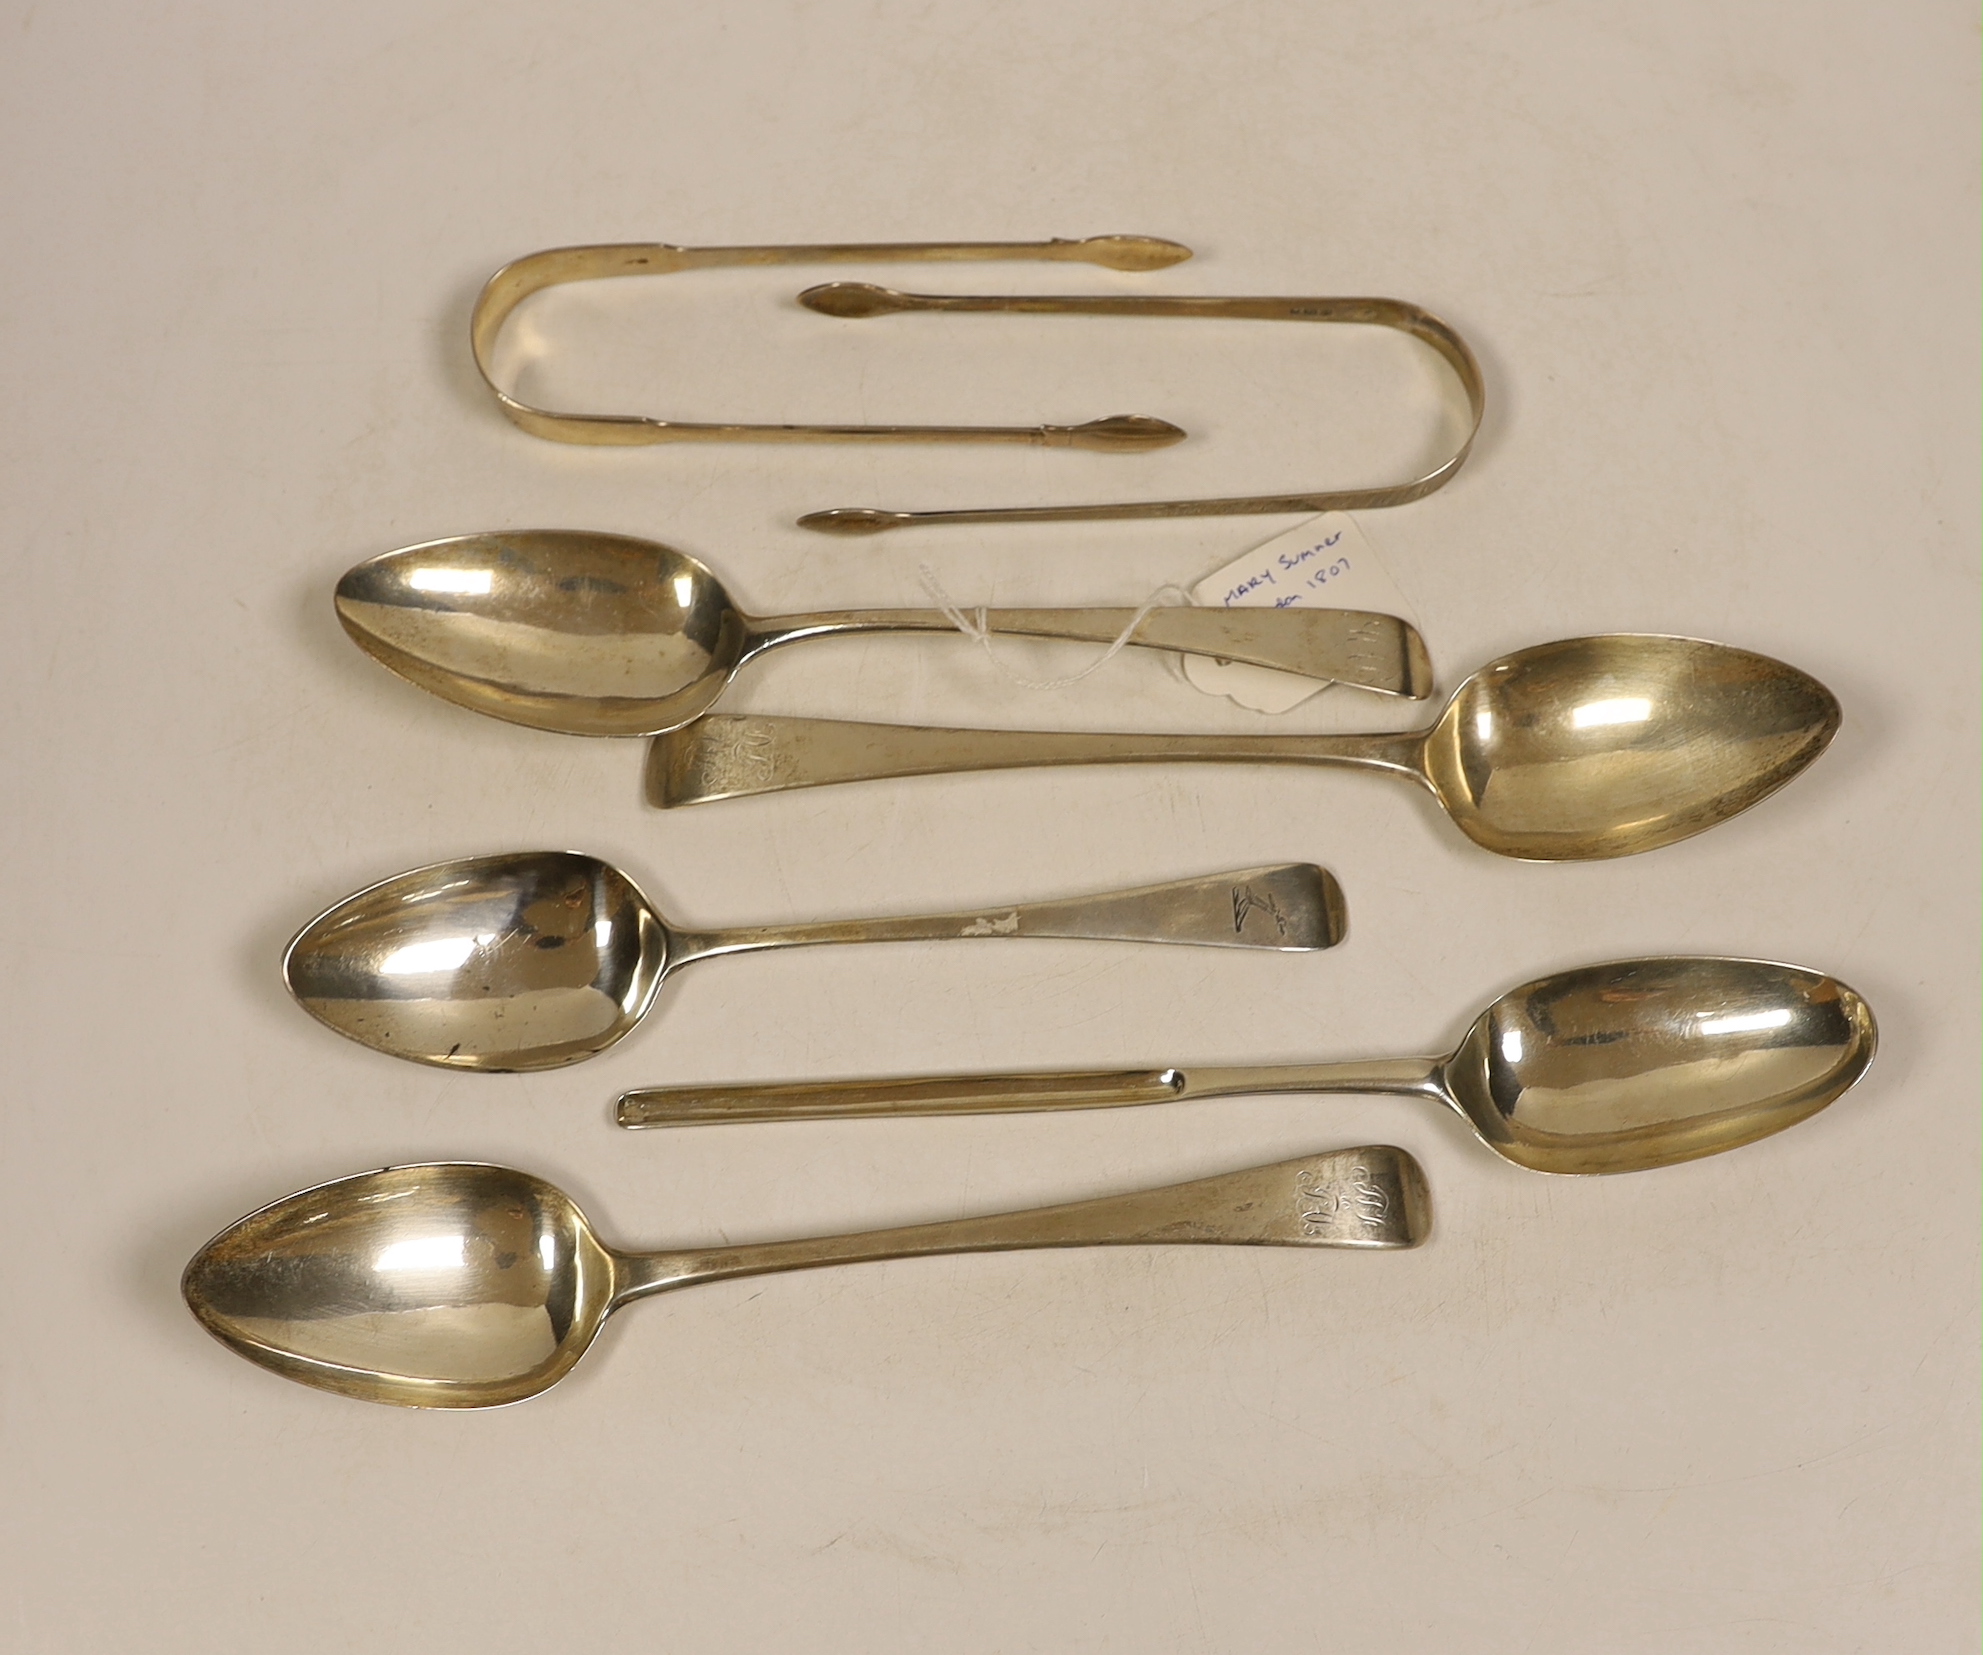 A George II silver marrow scoop spoon, London, 1745?, 24cm, a pair of George III silver Old English pattern table spoons, Peter, Ann & William Bateman, London, 1804, two other George III table spoons and two pairs of Bat